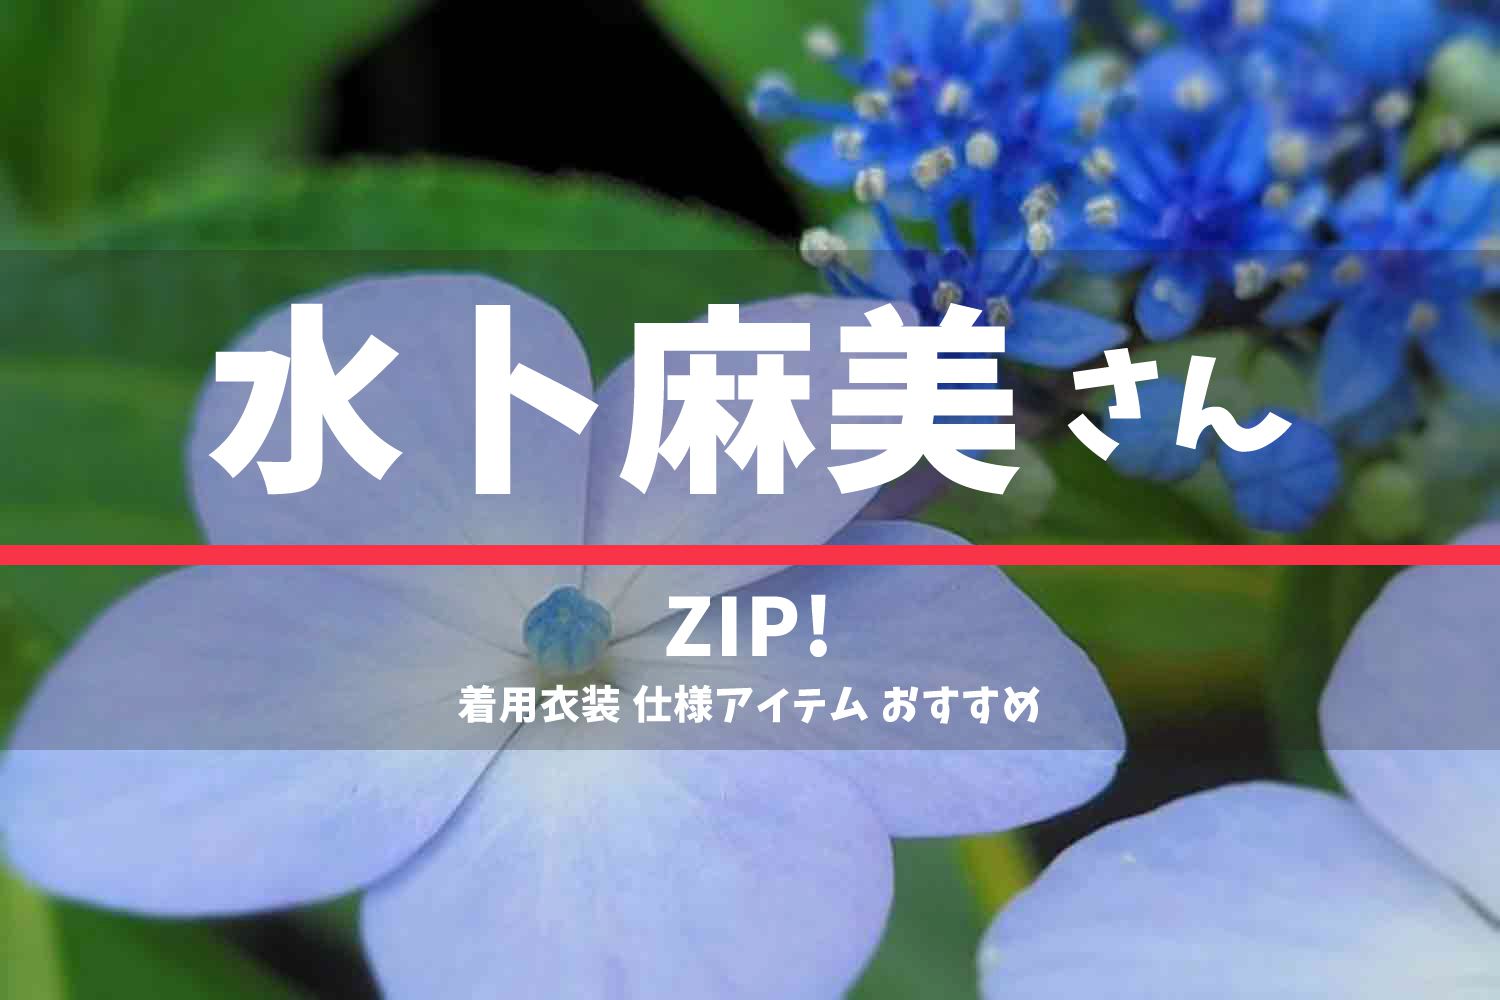 ZIP! 水卜麻美さん 番組 衣装 2022年7月5日放送